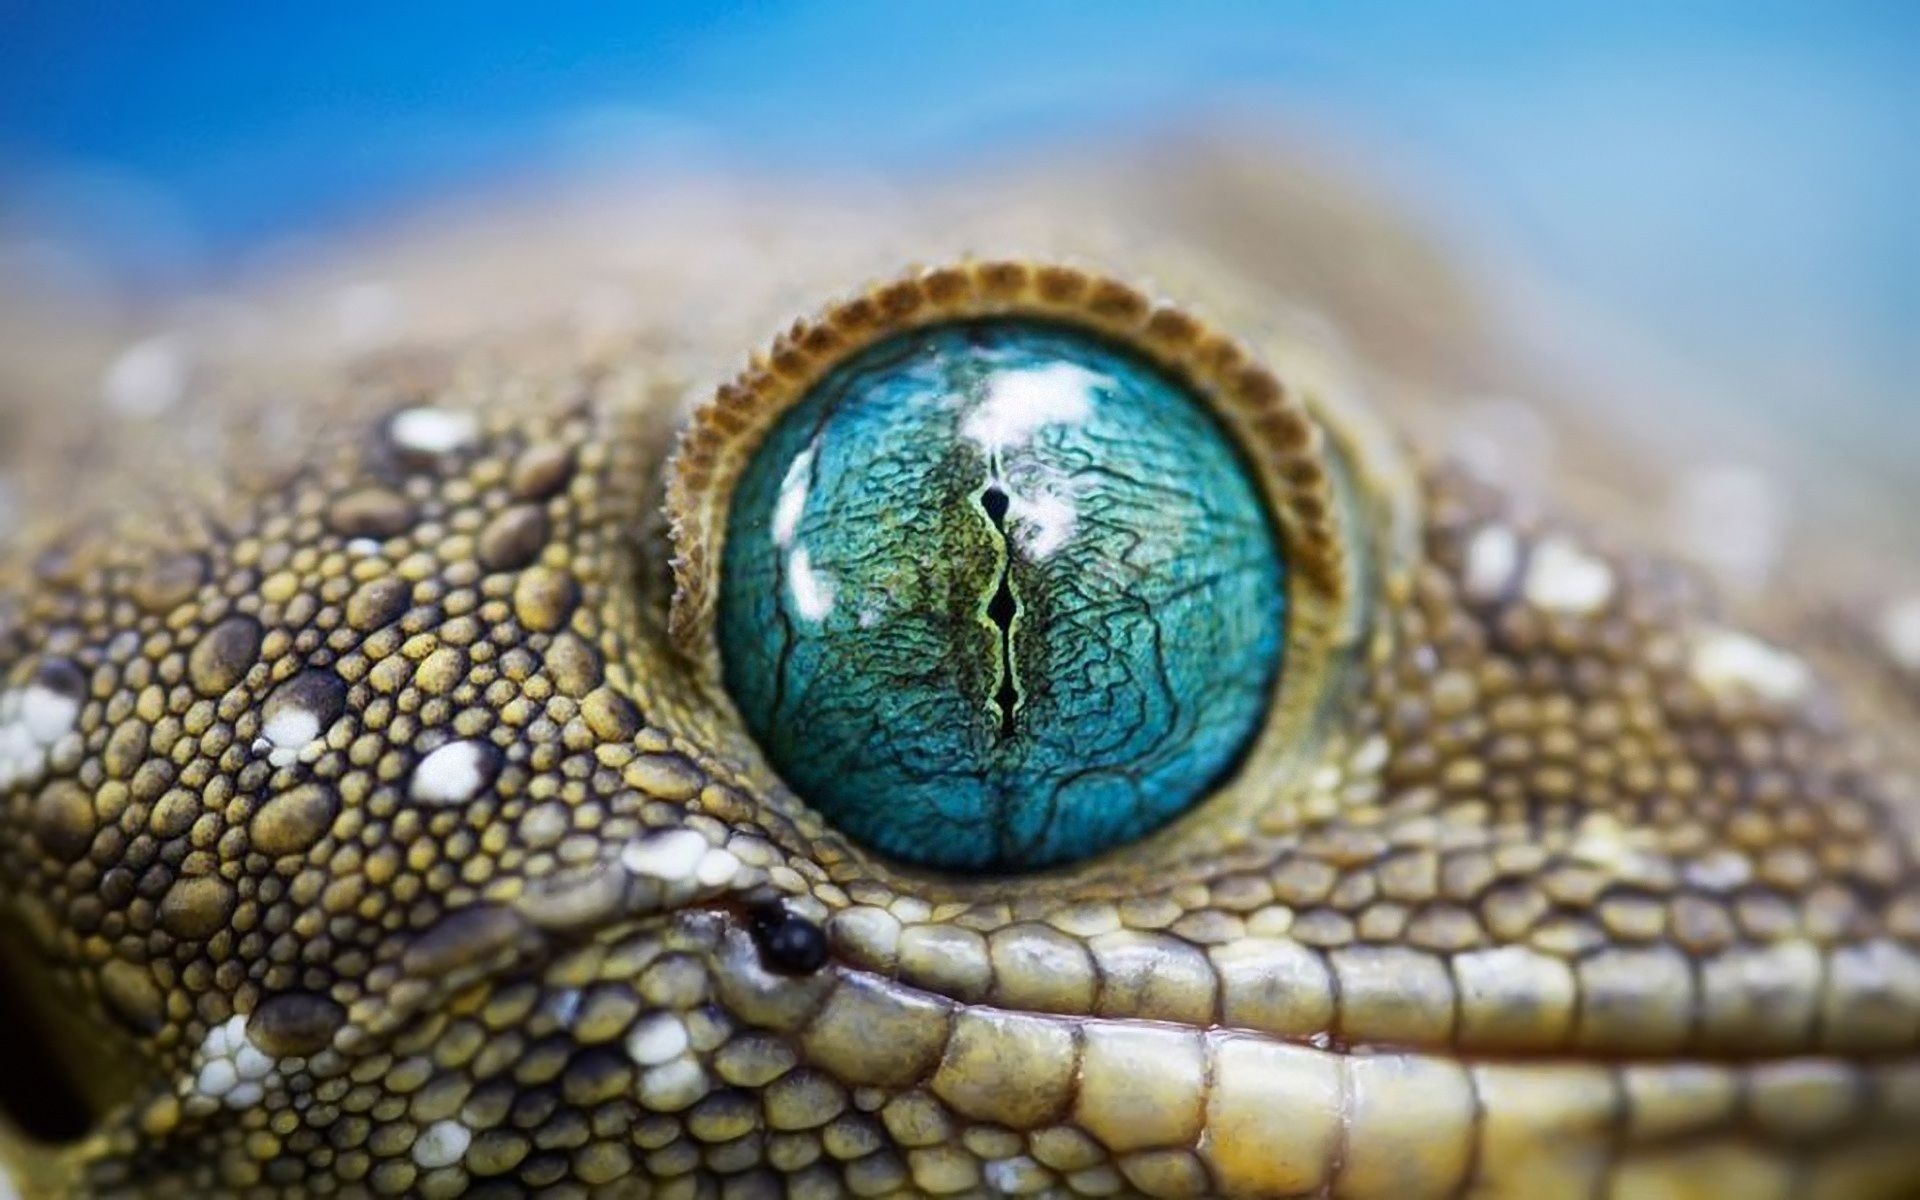 Blue Reptile Eye1